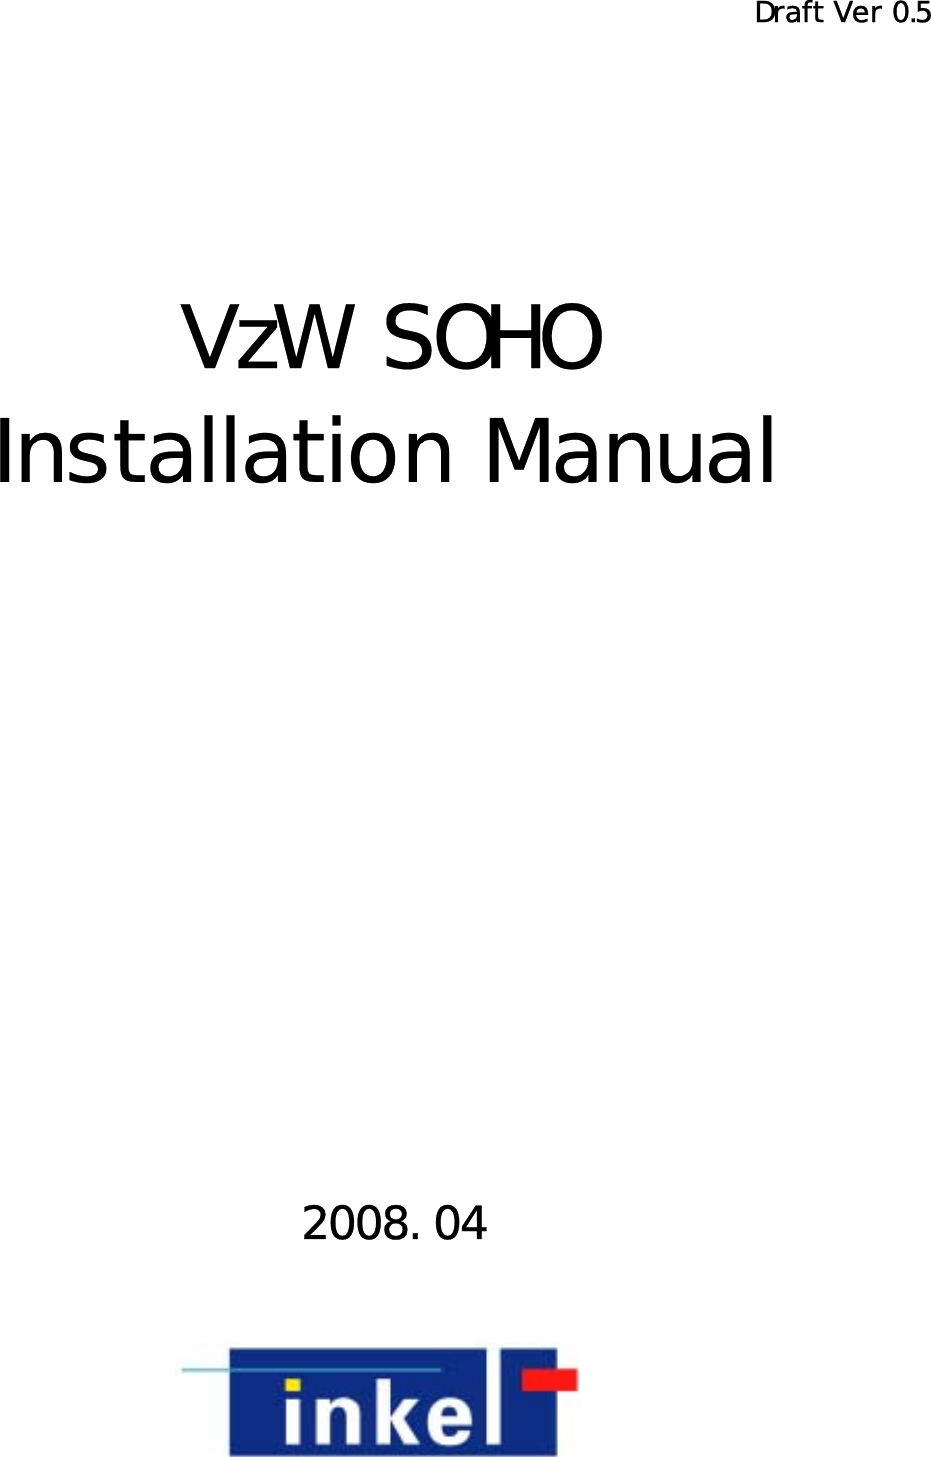                       VzW SOHO  Installation Manual  2008. 04 Draft Ver 0.5